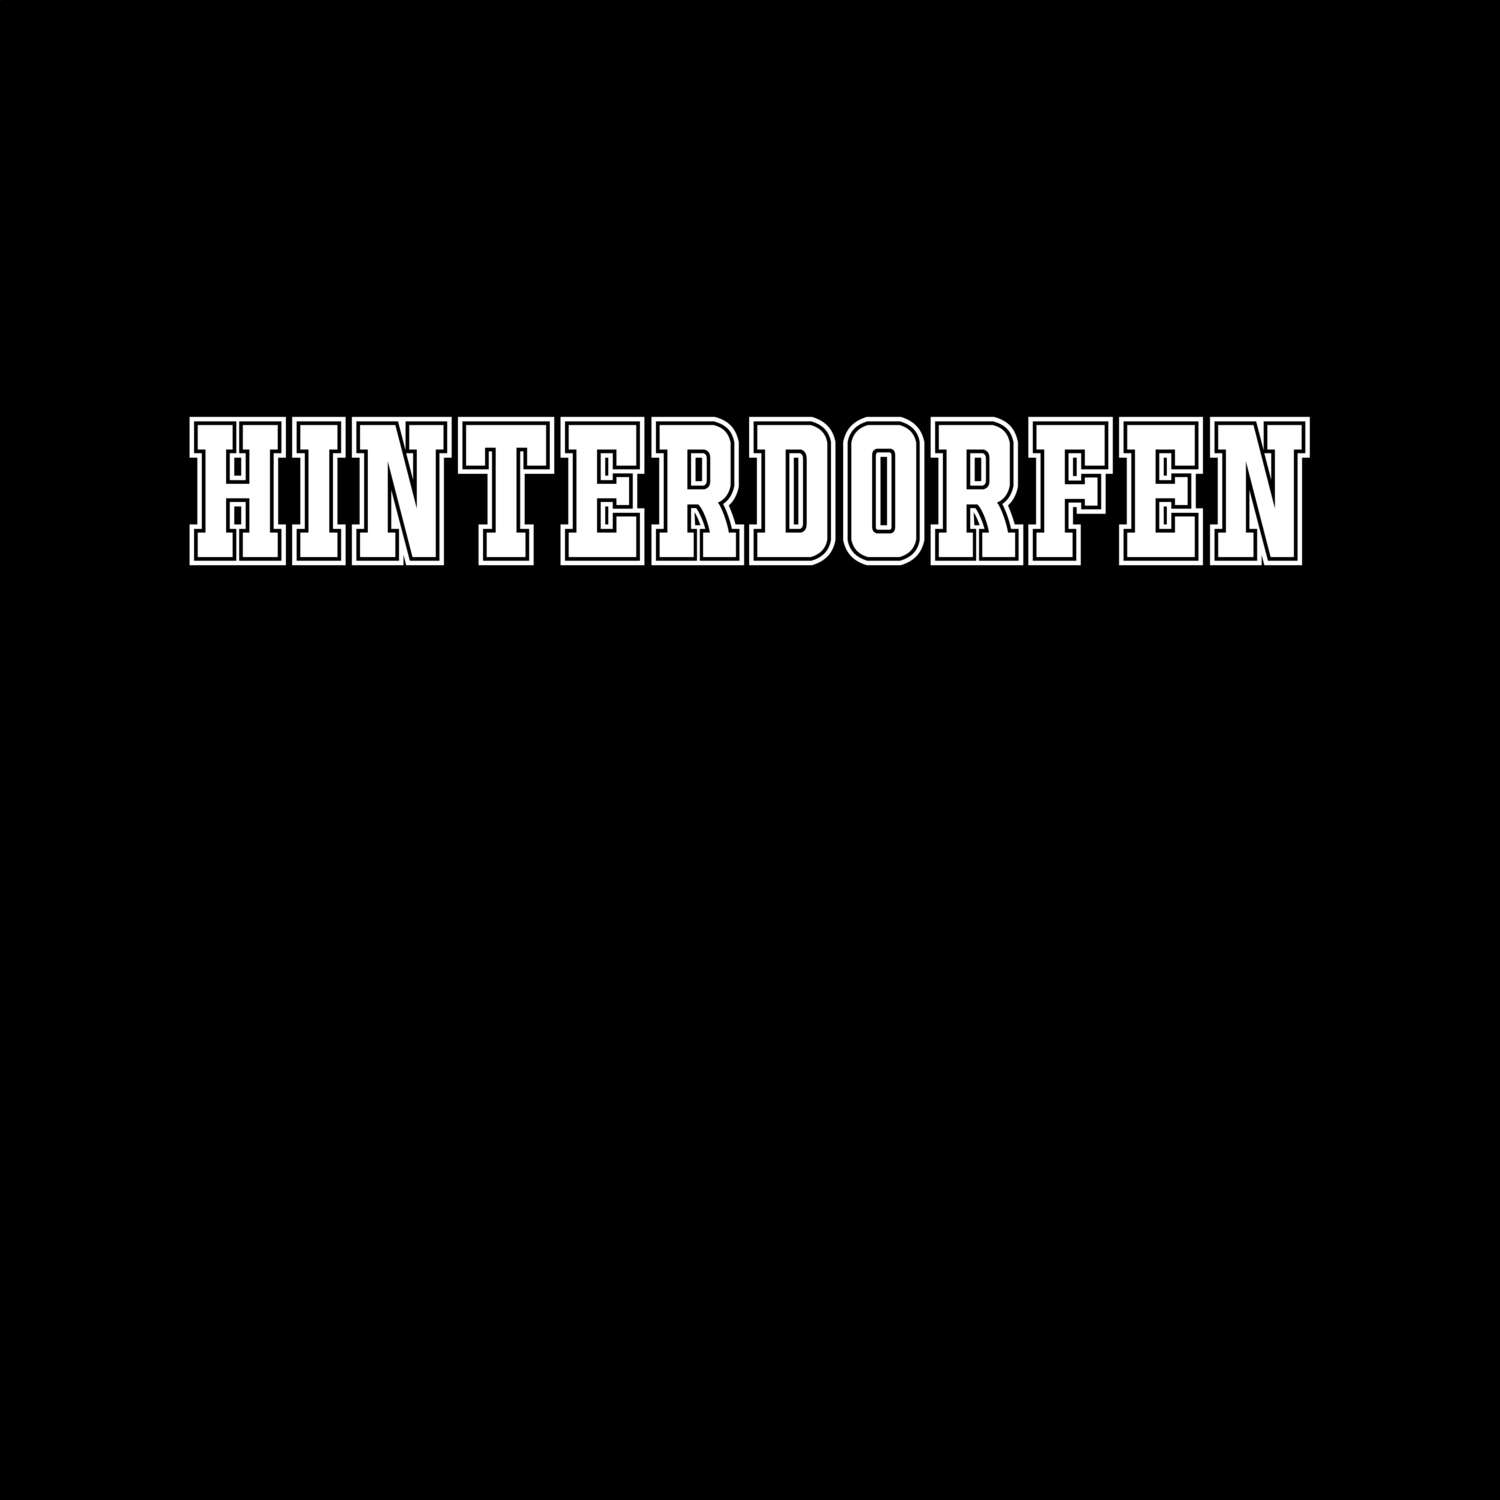 Hinterdorfen T-Shirt »Classic«